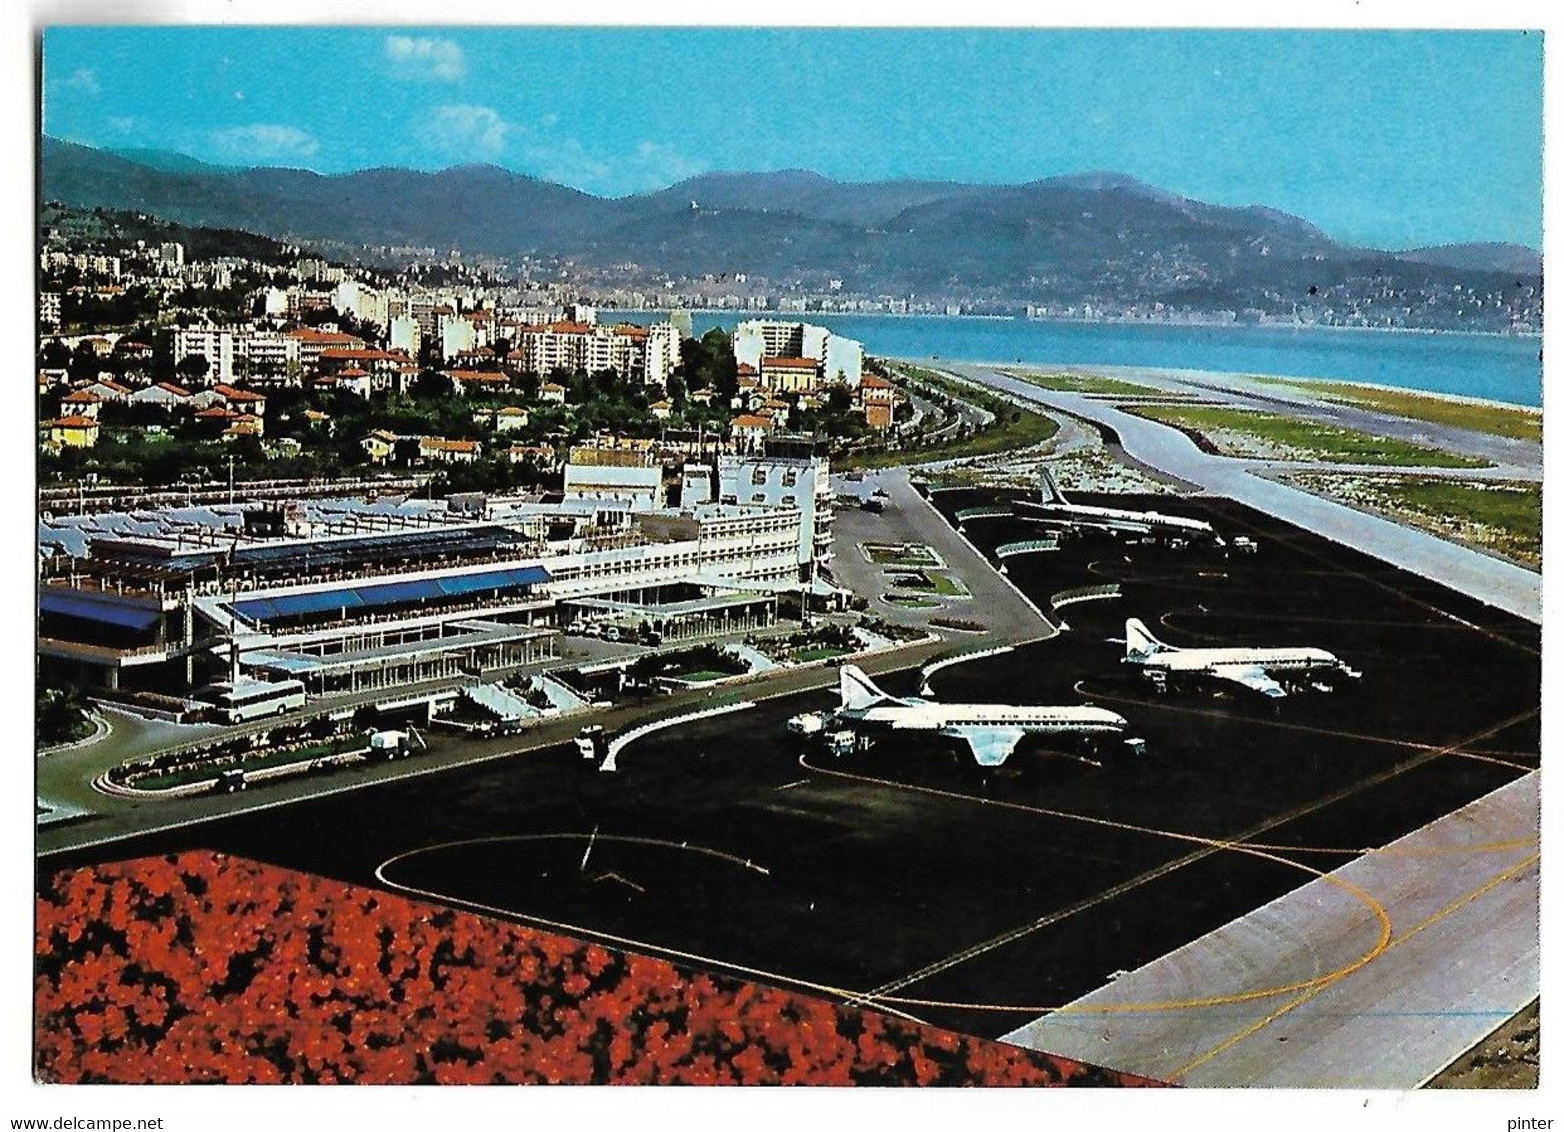 NICE - Vue Aérienne De L'Aéroport Nice-Côte D'Azur - Luftfahrt - Flughafen